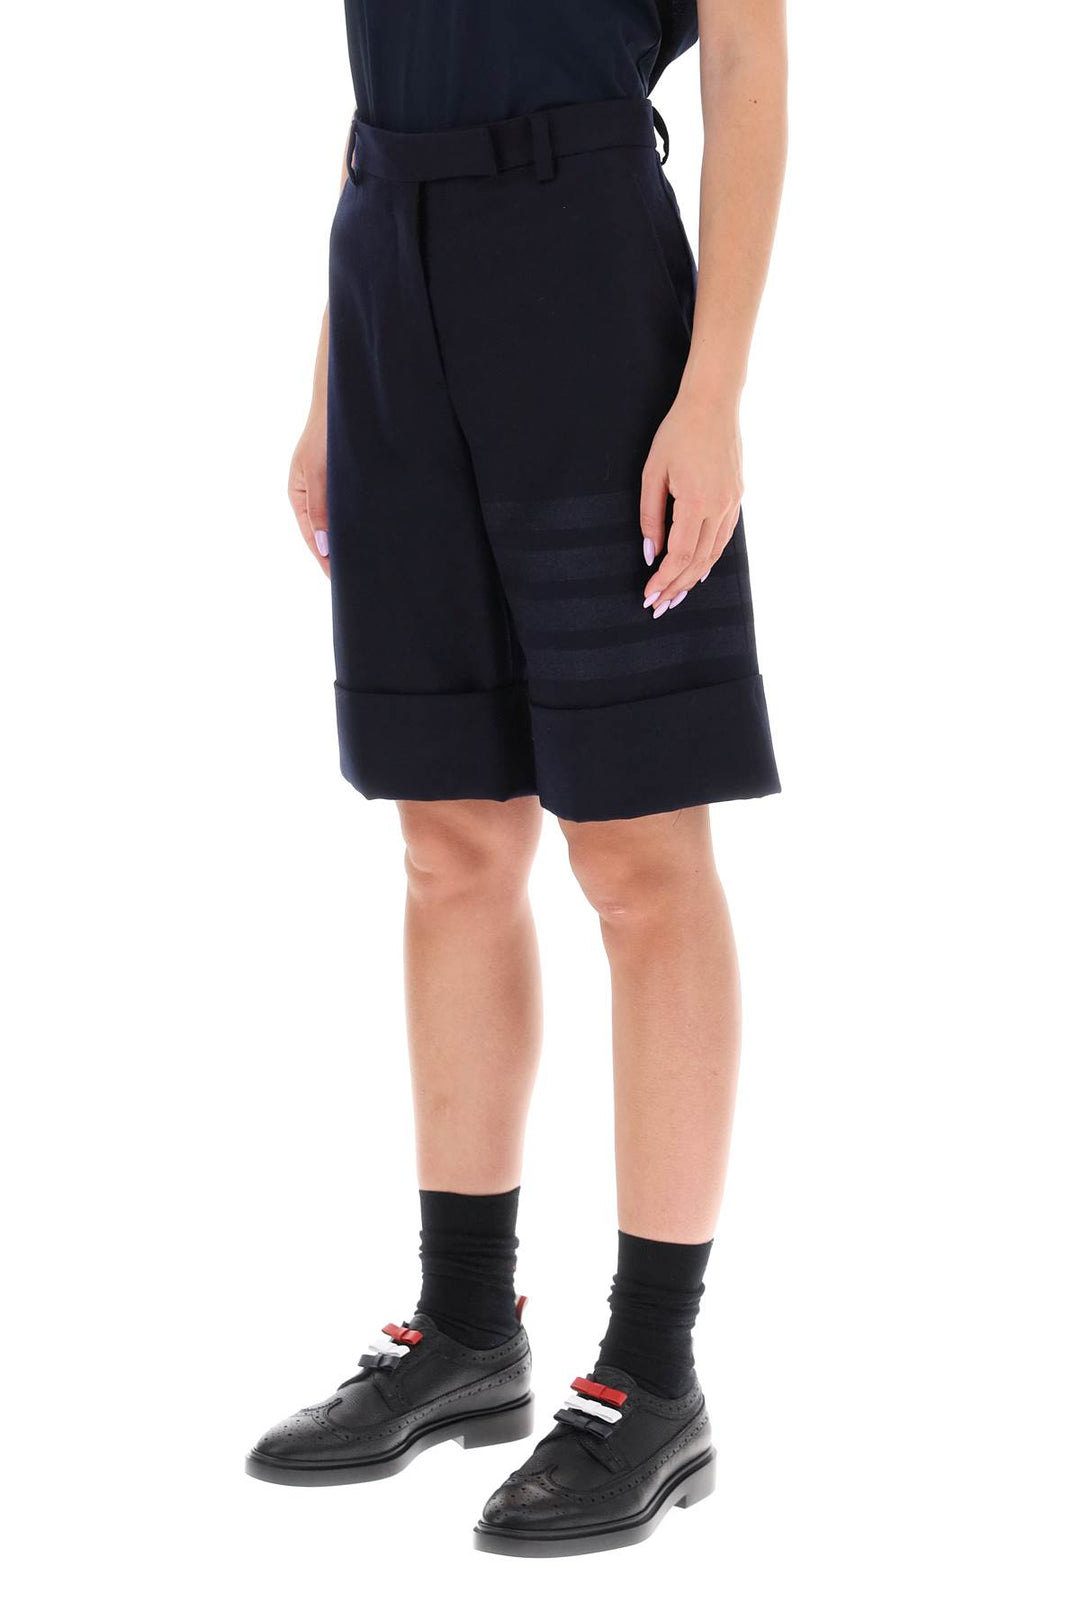 Thom Browne Shorts In Flannel With 4 Bar Motif   Blu